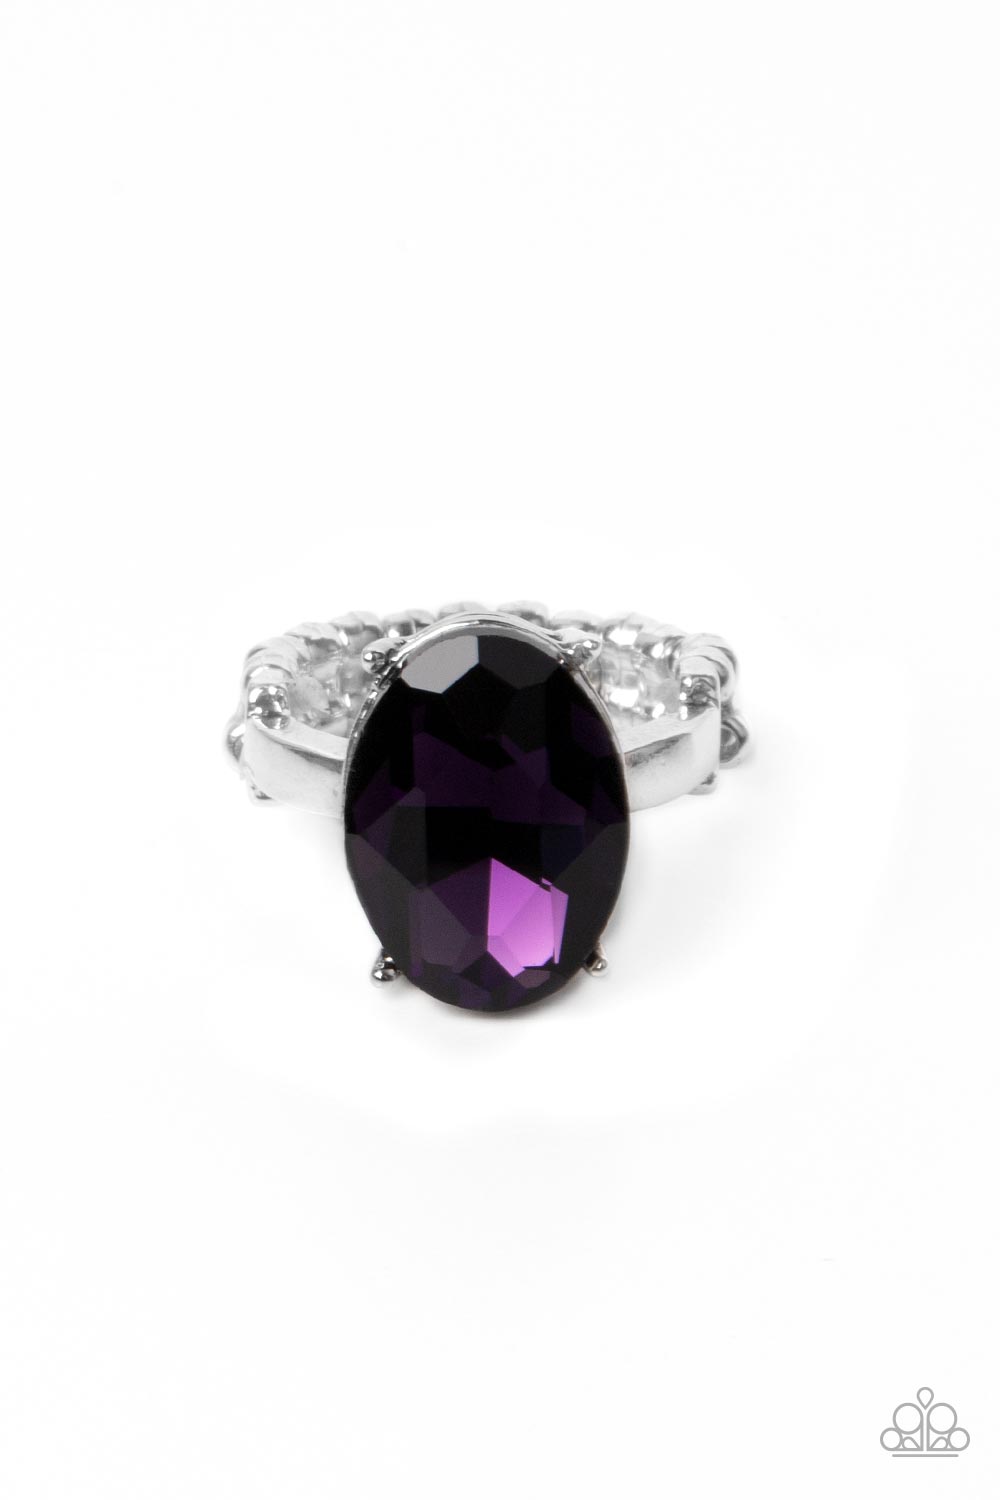 Updated Dazzle Purple Rhinestone Ring - Paparazzi Accessories- lightbox - CarasShop.com - $5 Jewelry by Cara Jewels